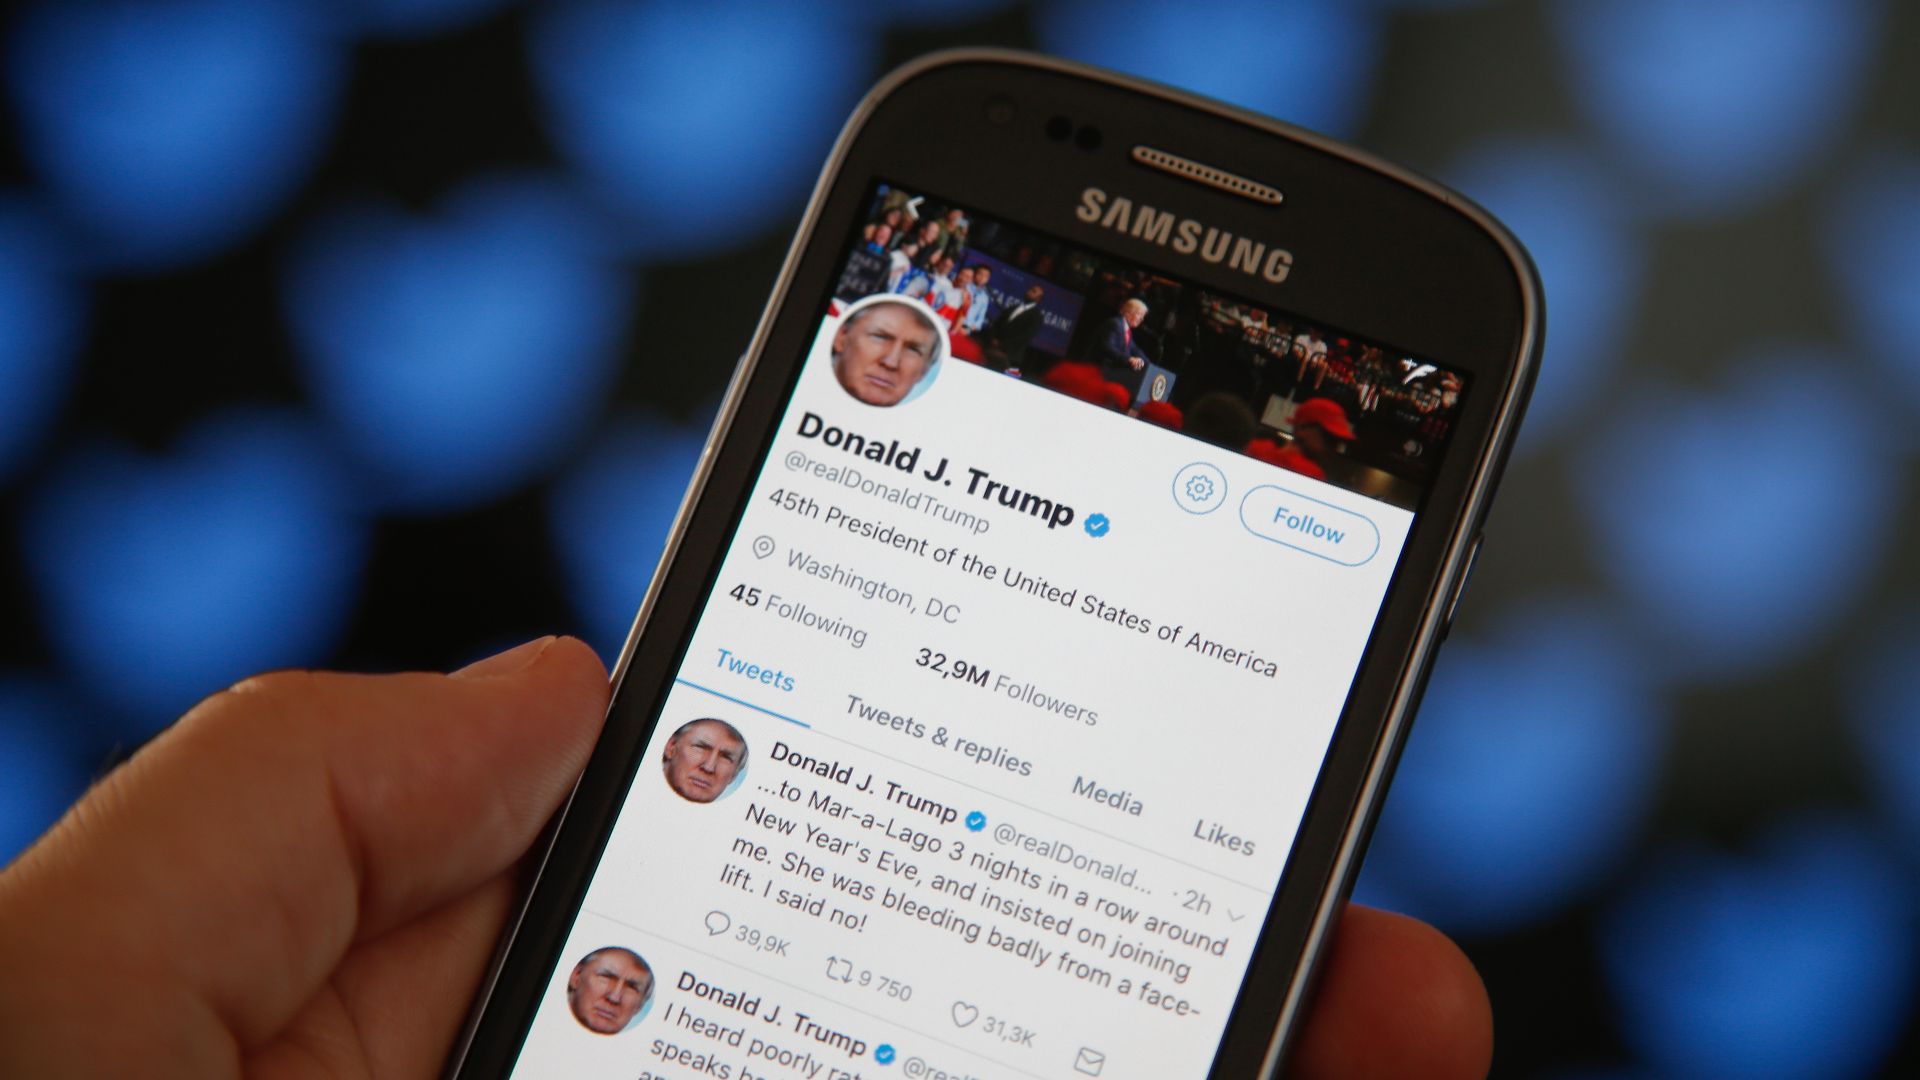 President Trump's twitter feed